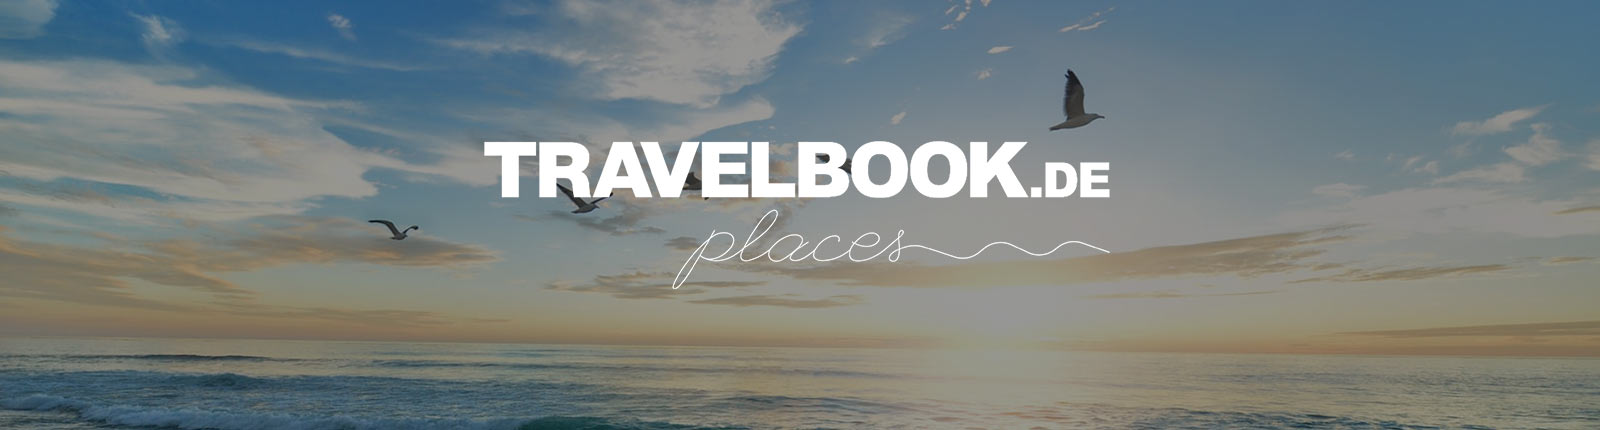 header_travelbookplaces